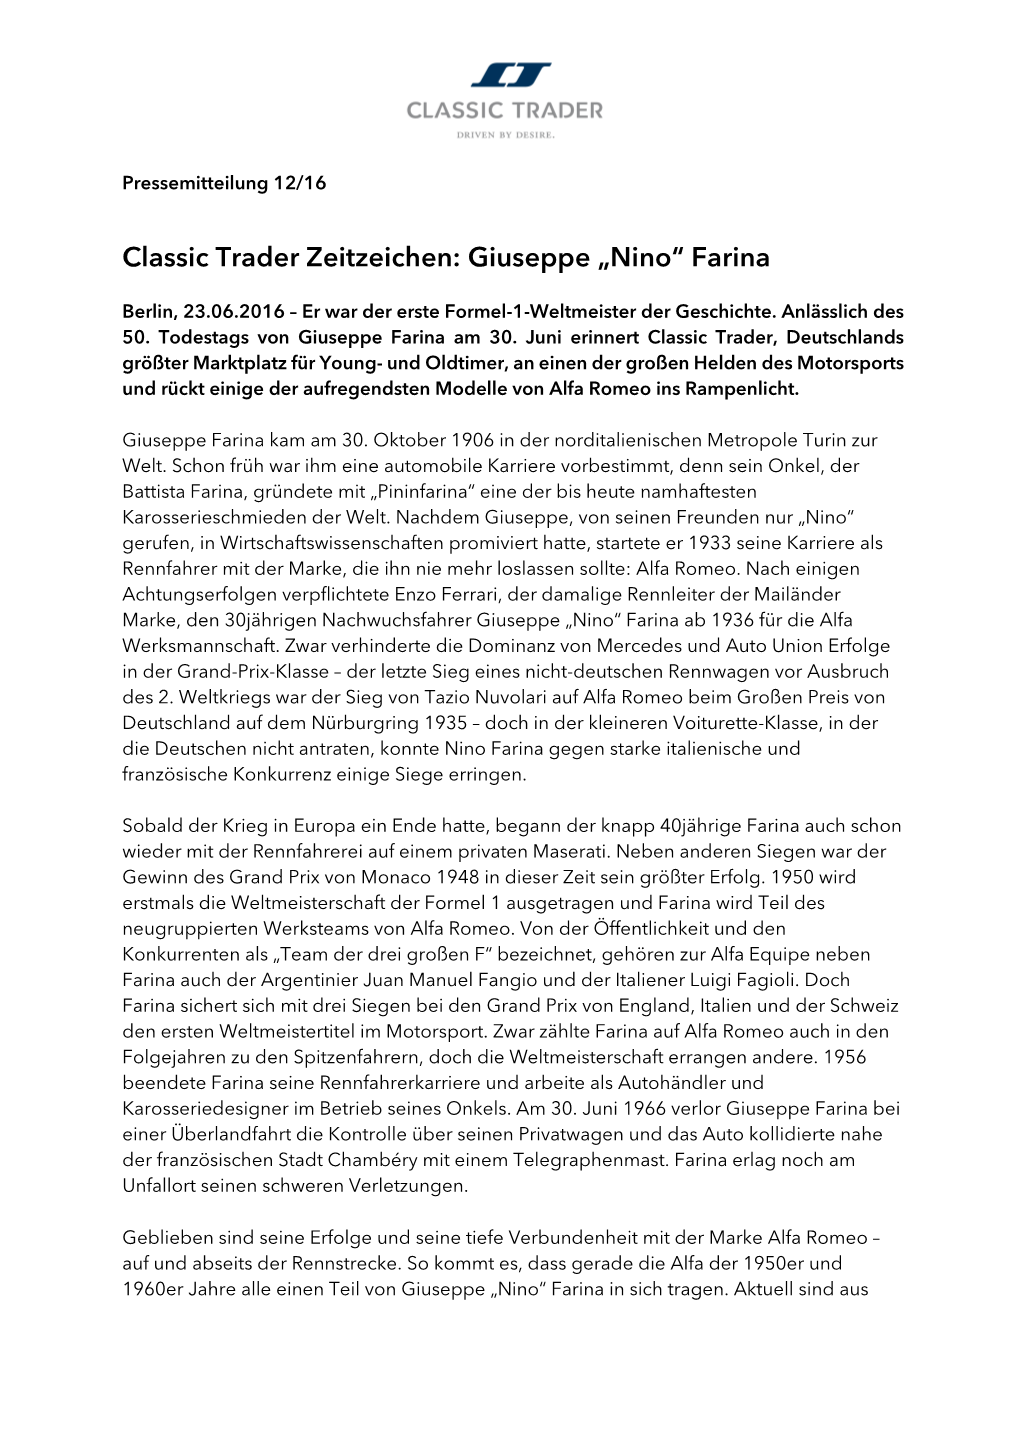 Classic Trader Zeitzeichen: Giuseppe „Nino“ Farina